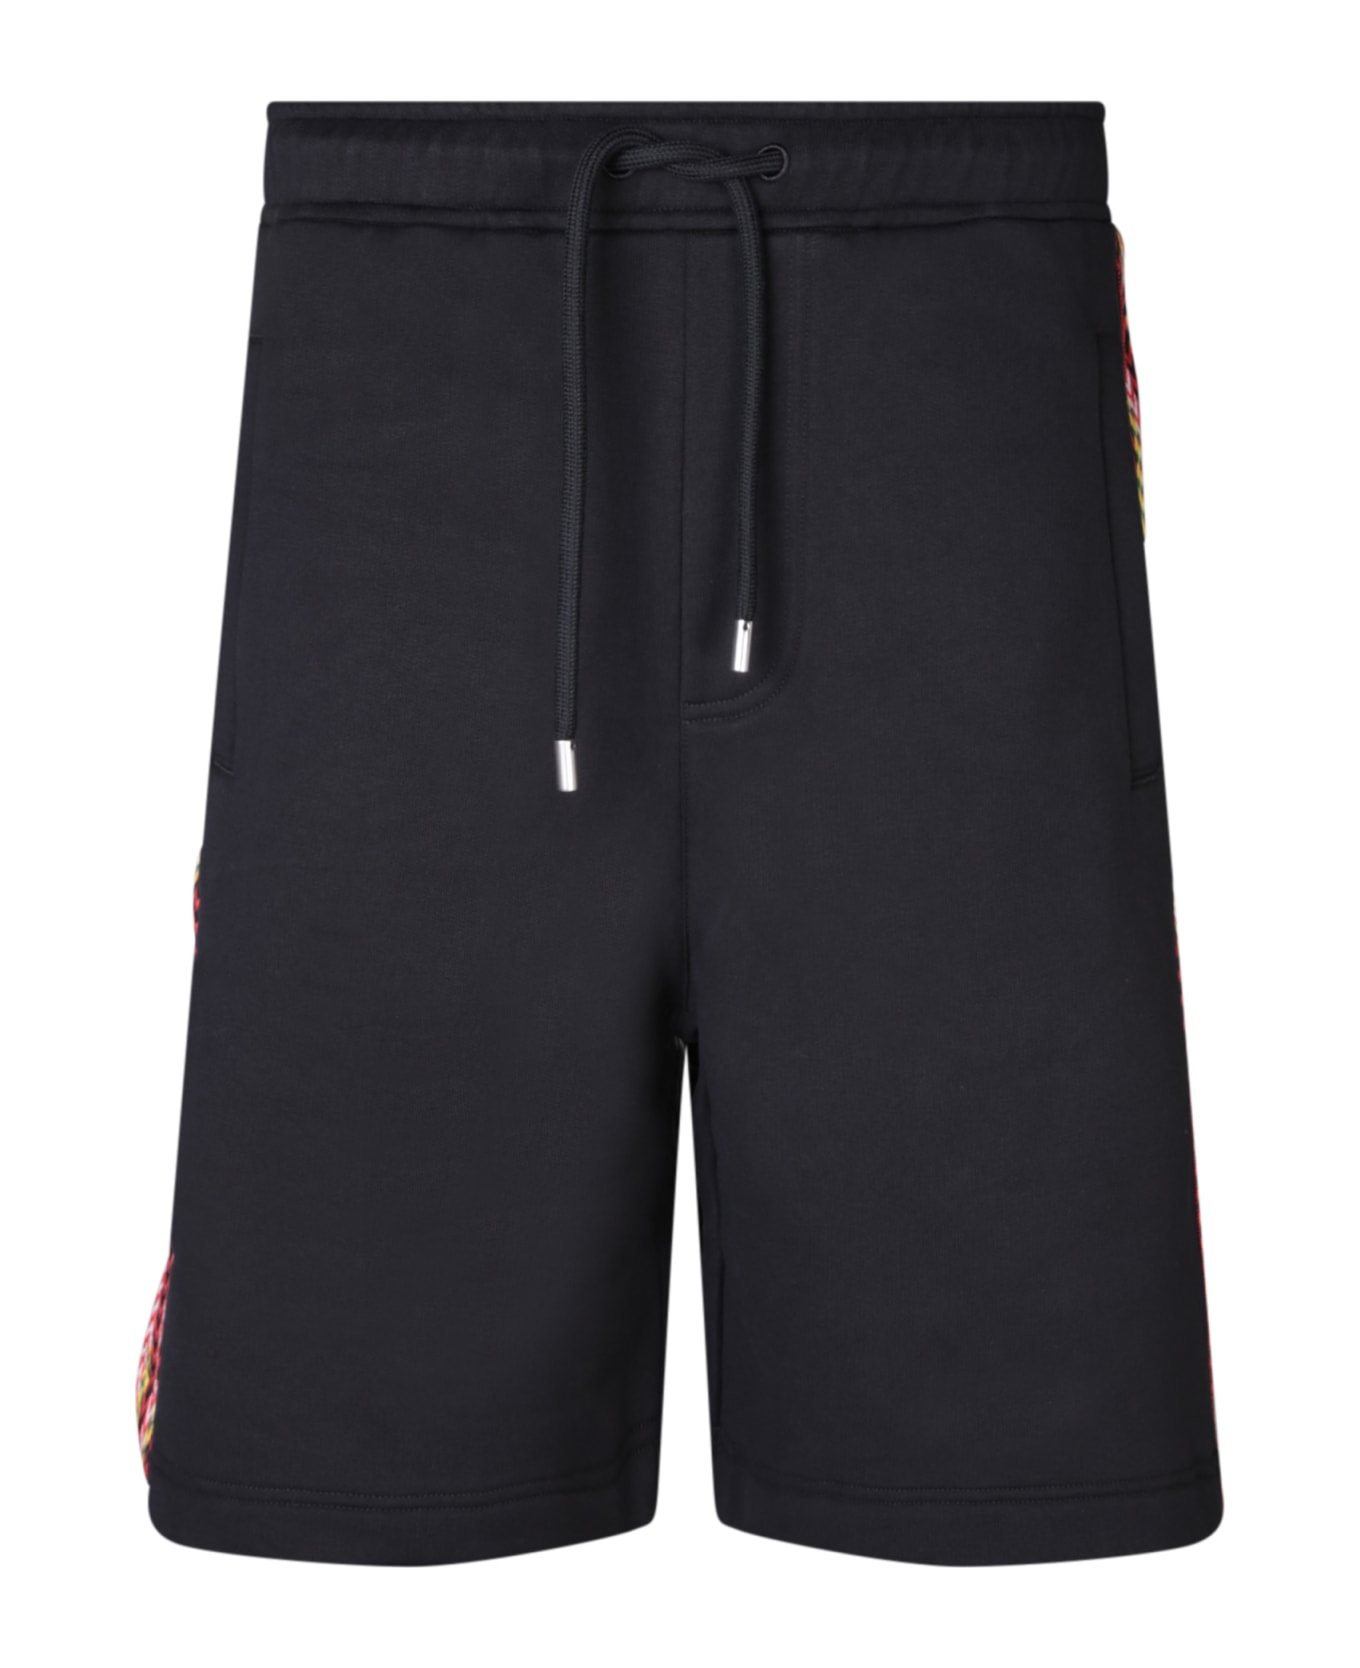 Lanvin Curb Black Bermuda Shorts - Black